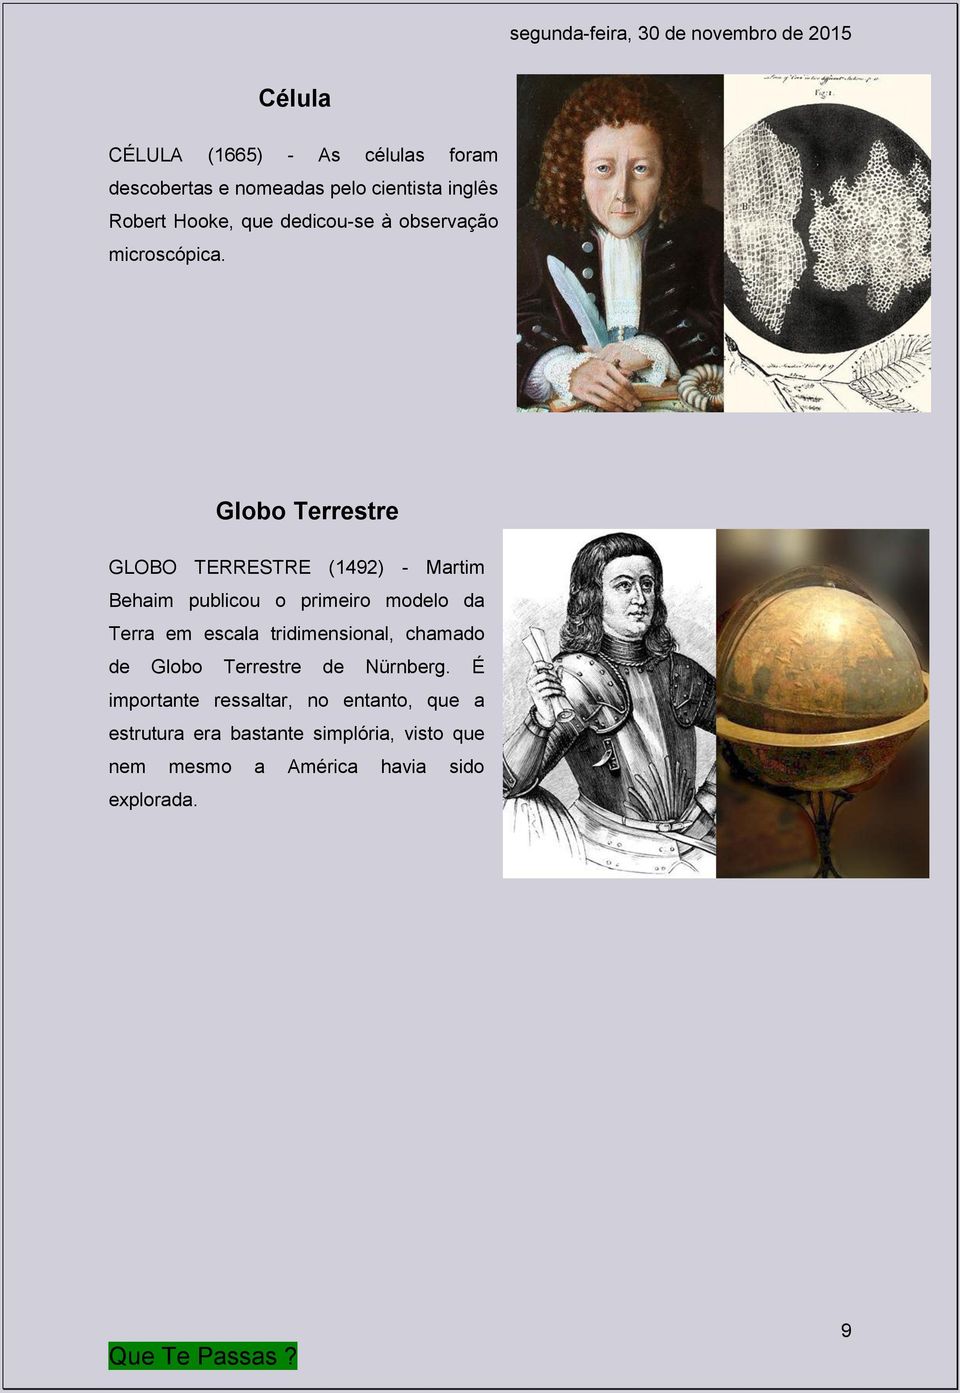 Globo Terrestre GLOBO TERRESTRE (1492) - Martim Behaim publicou o primeiro modelo da Terra em escala